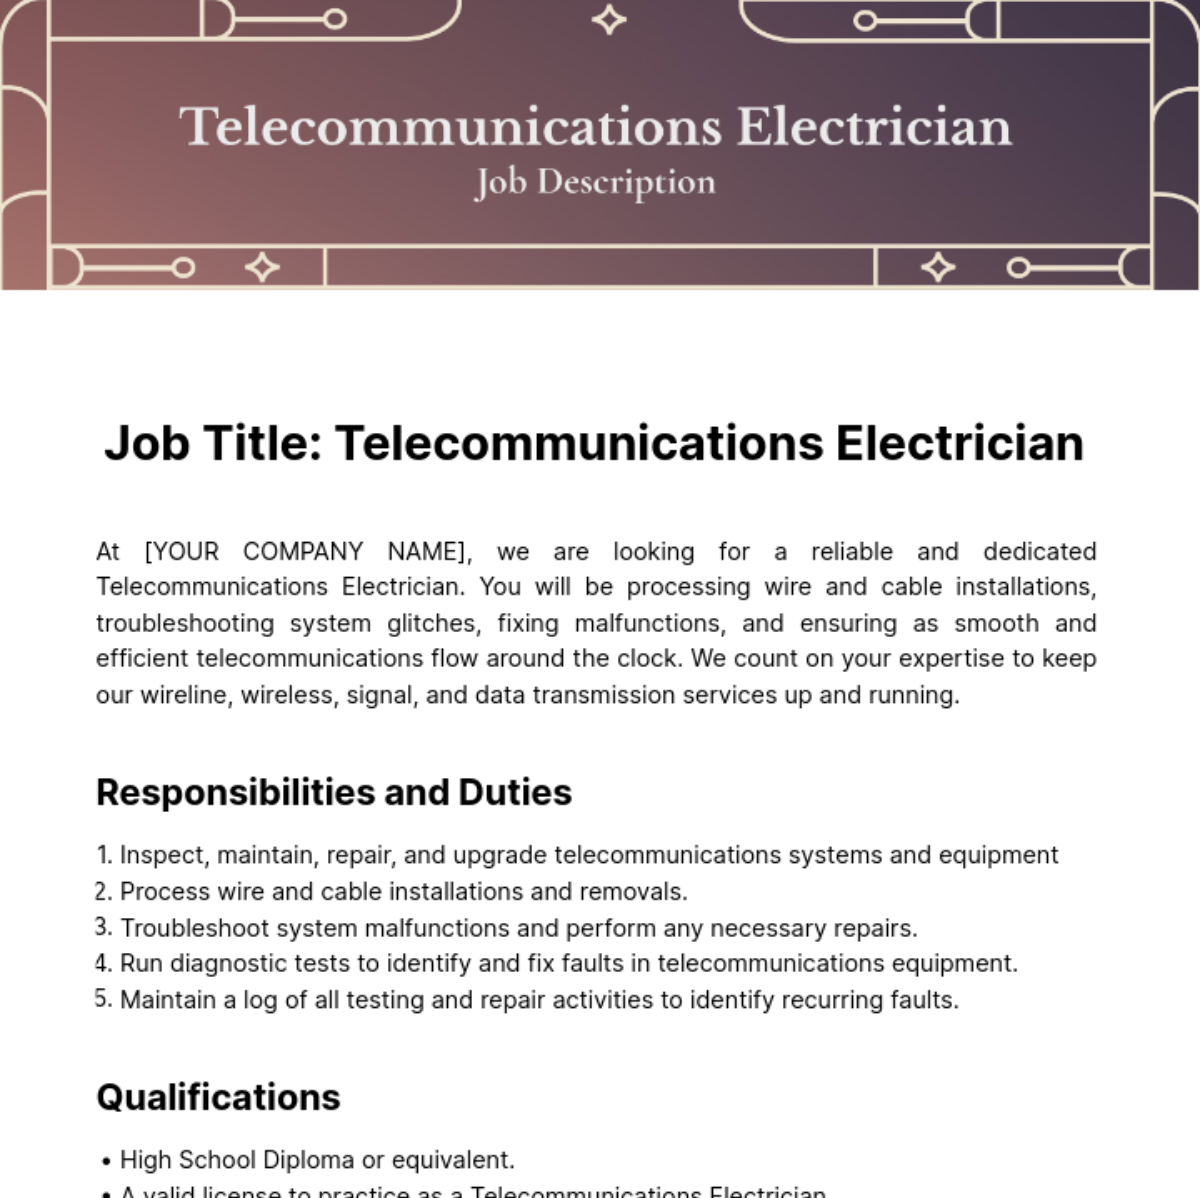 Telecommunications Electrician Job Description Template